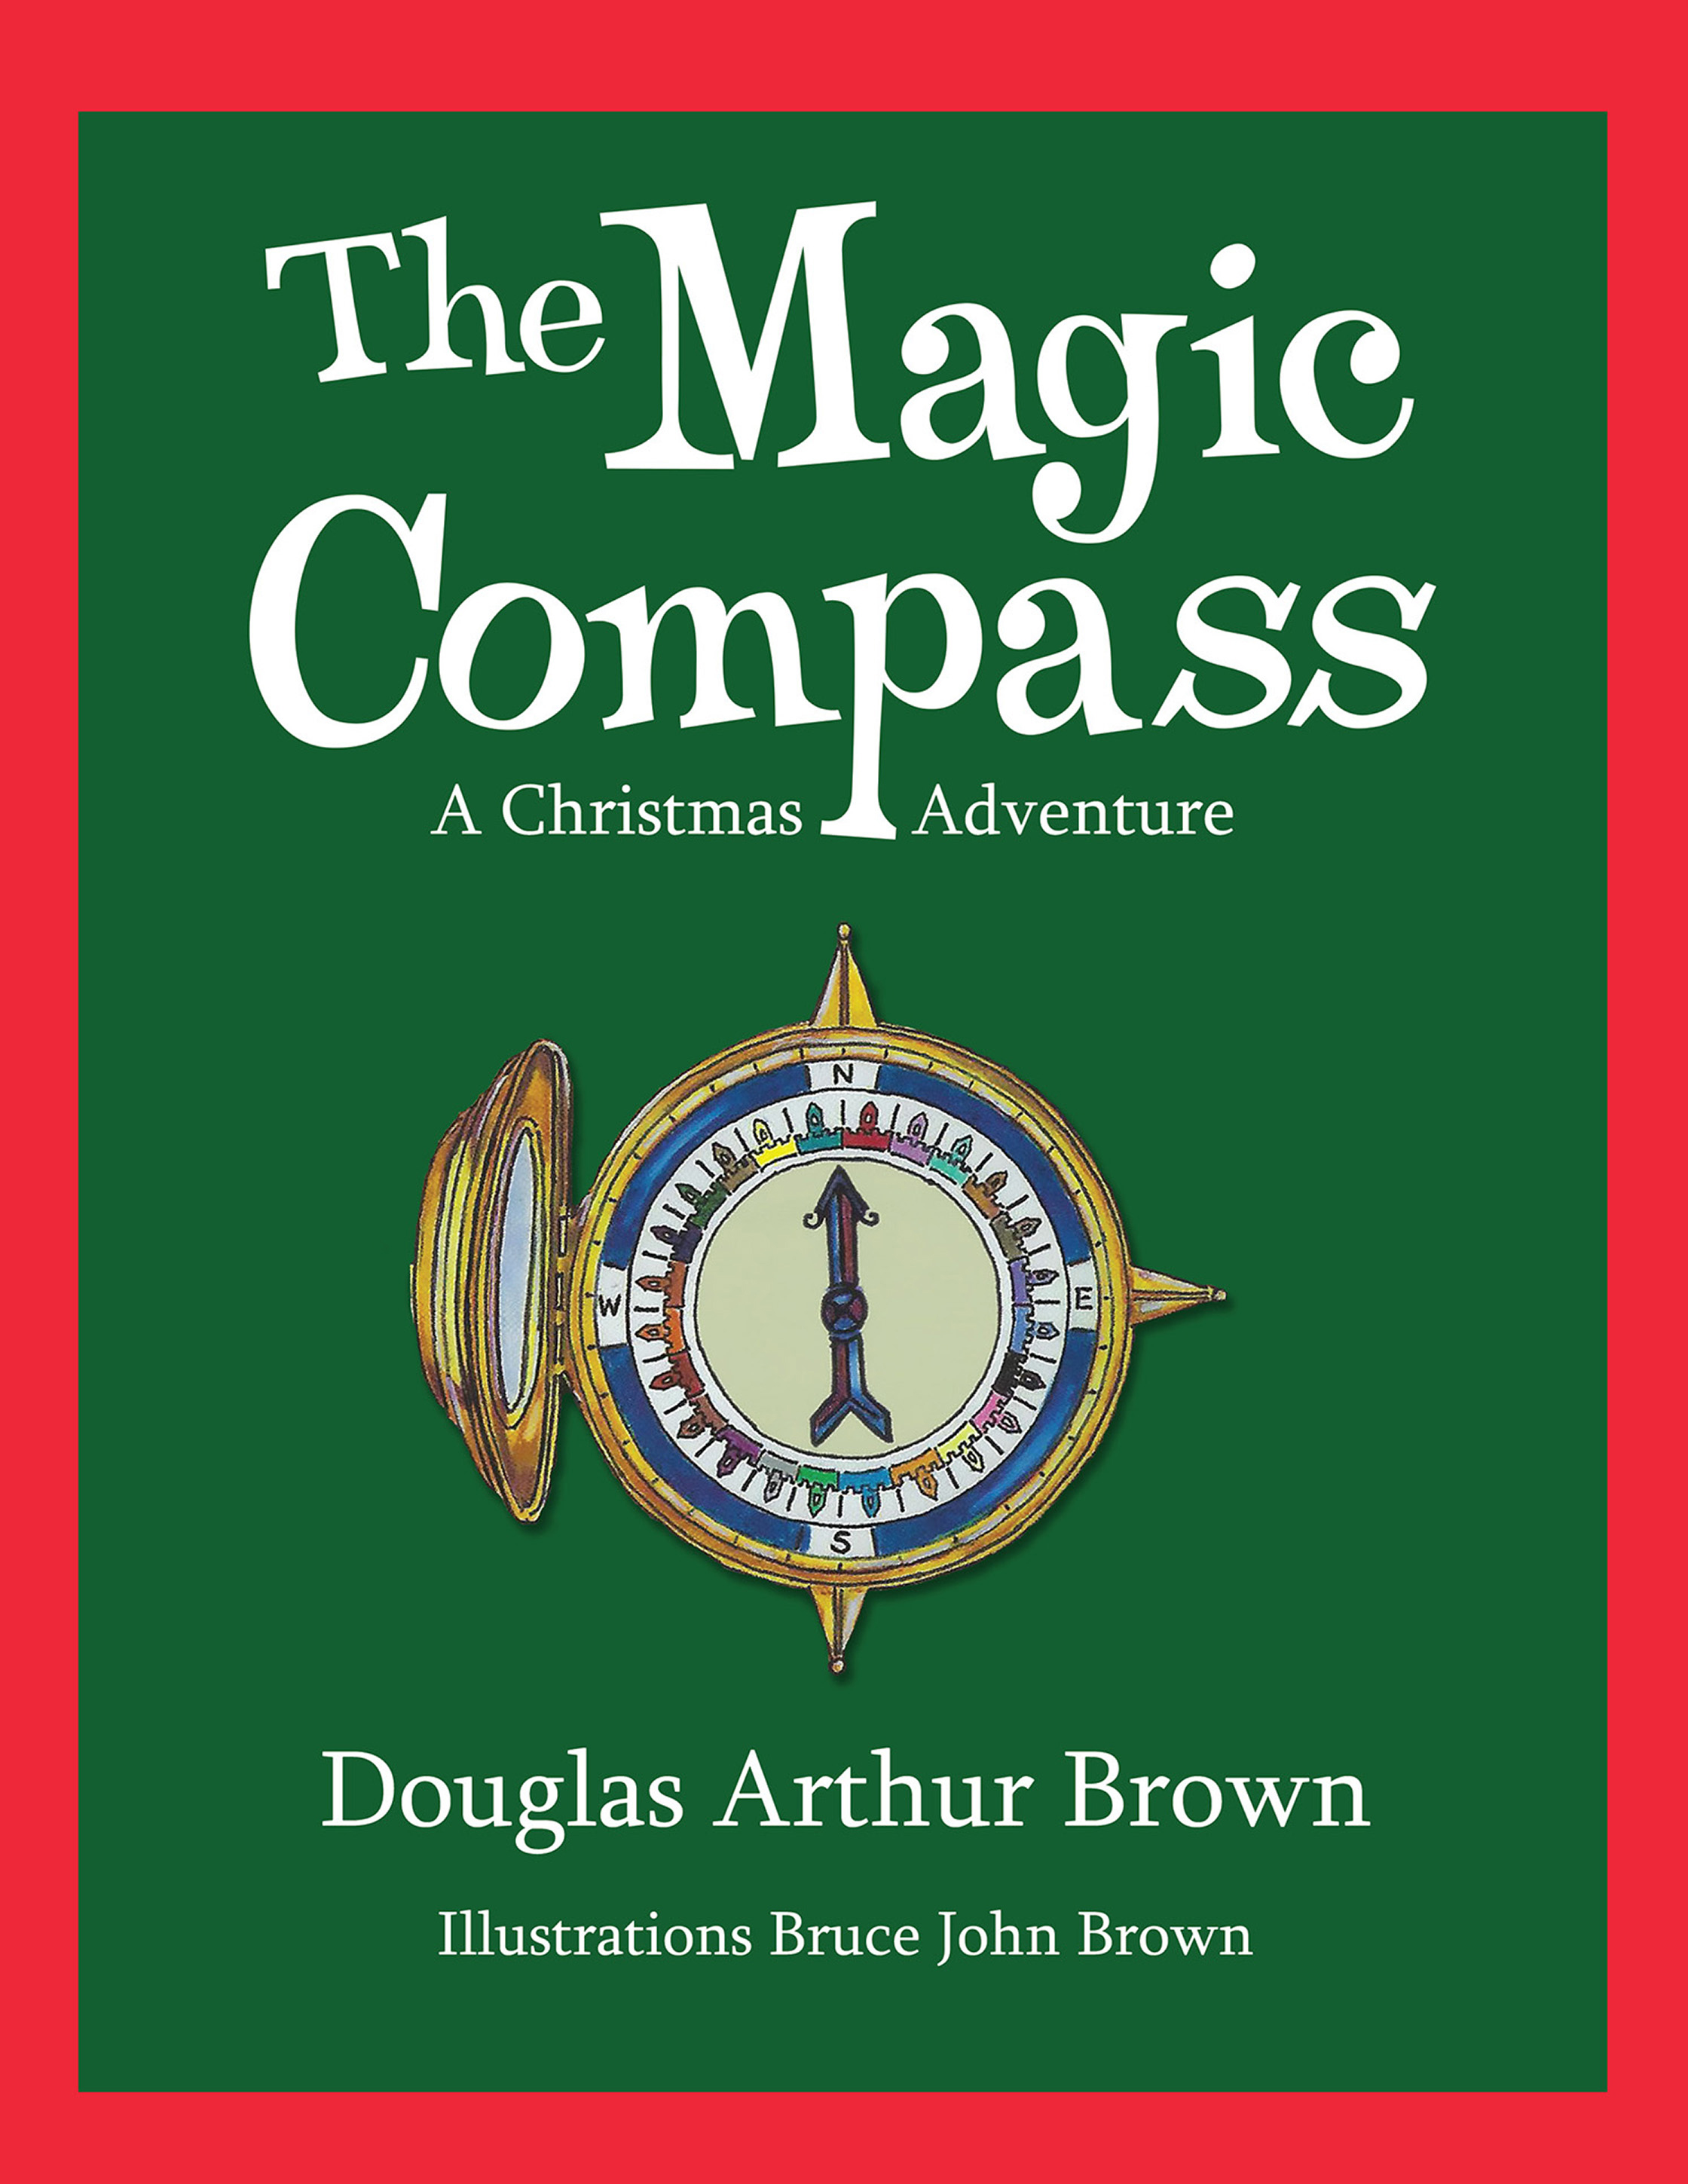 The Magic Compass